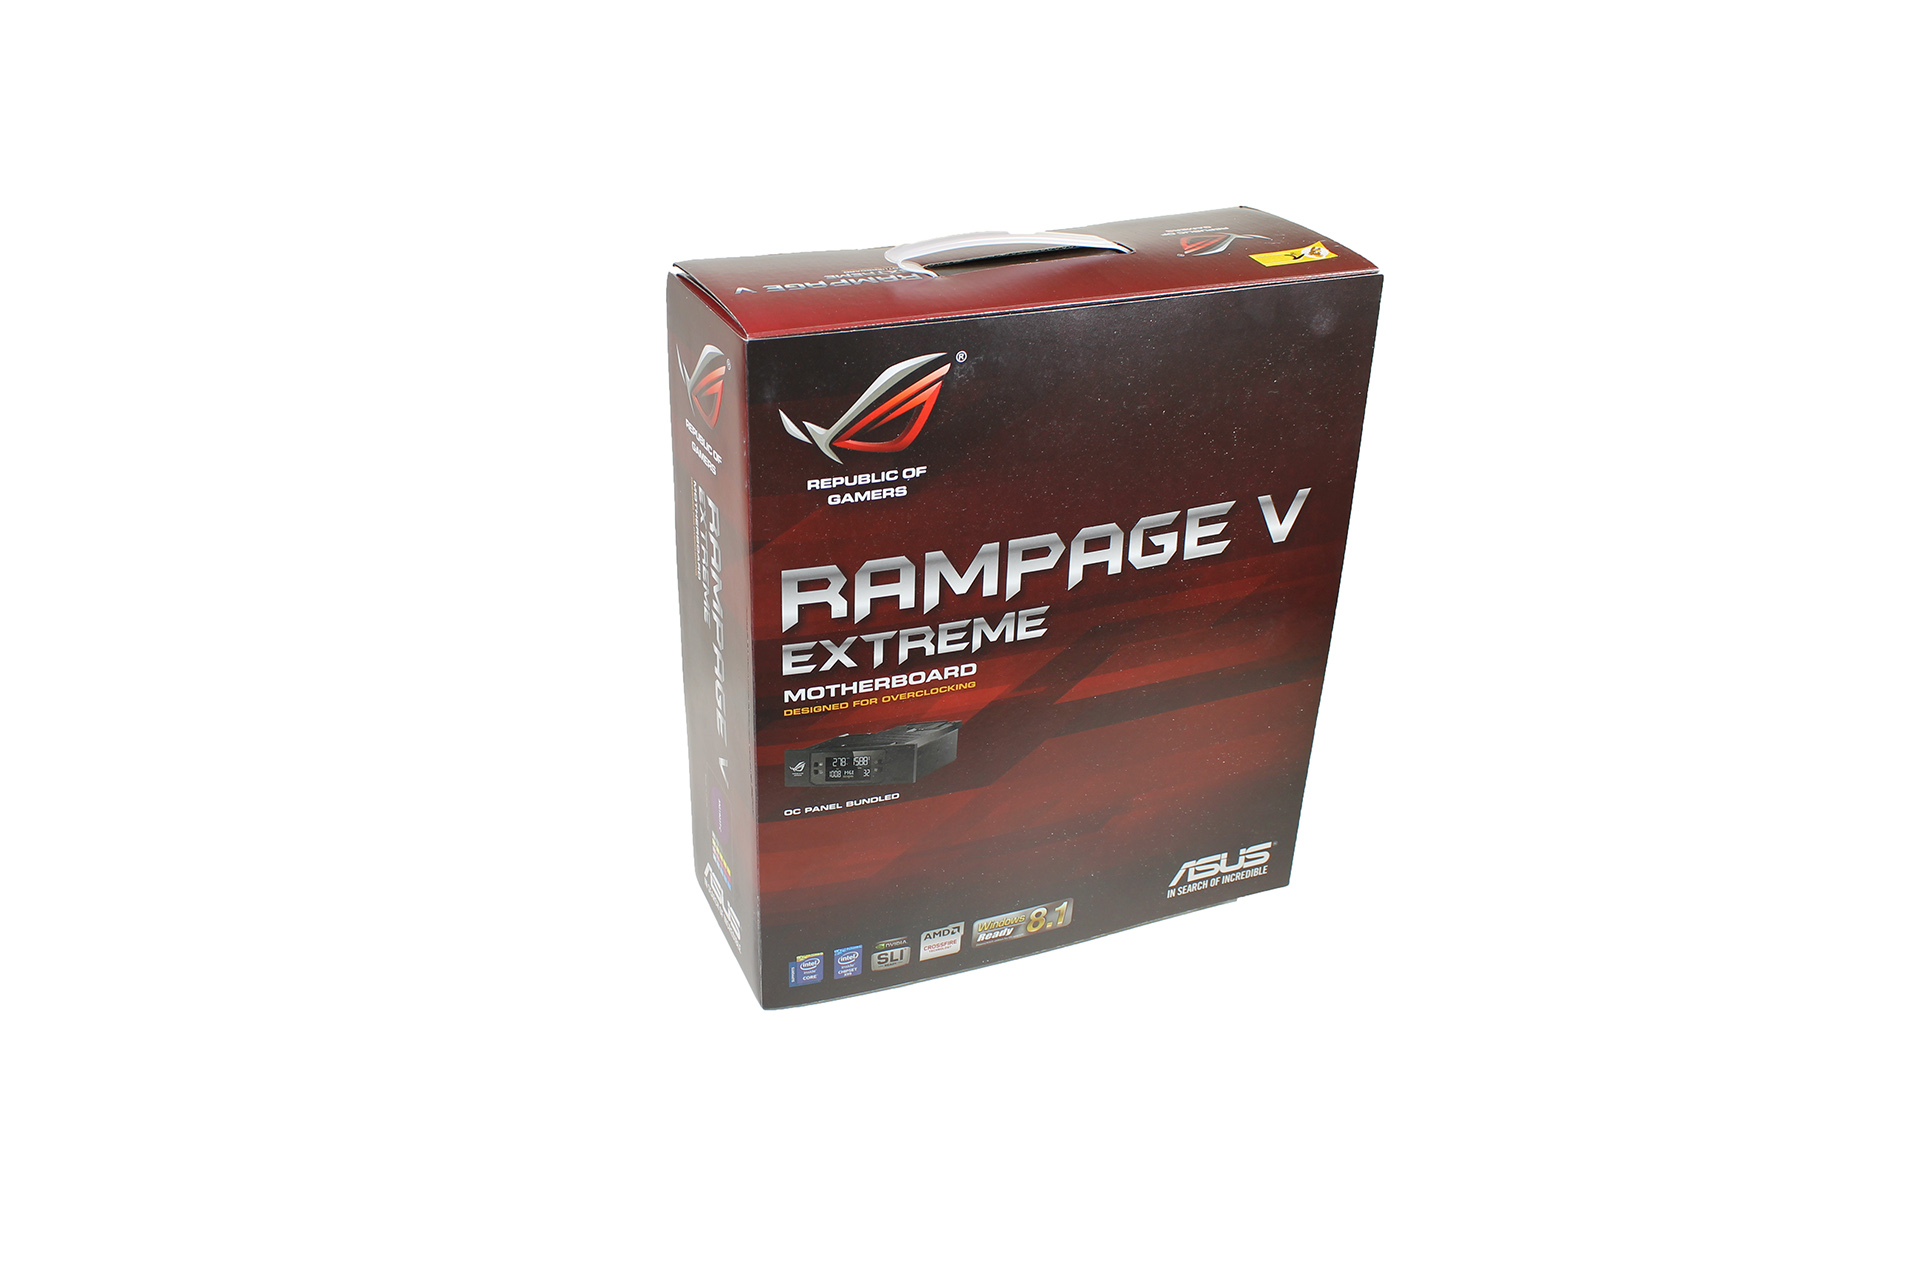 Asus Rog Rampage V extreme - Verpackung